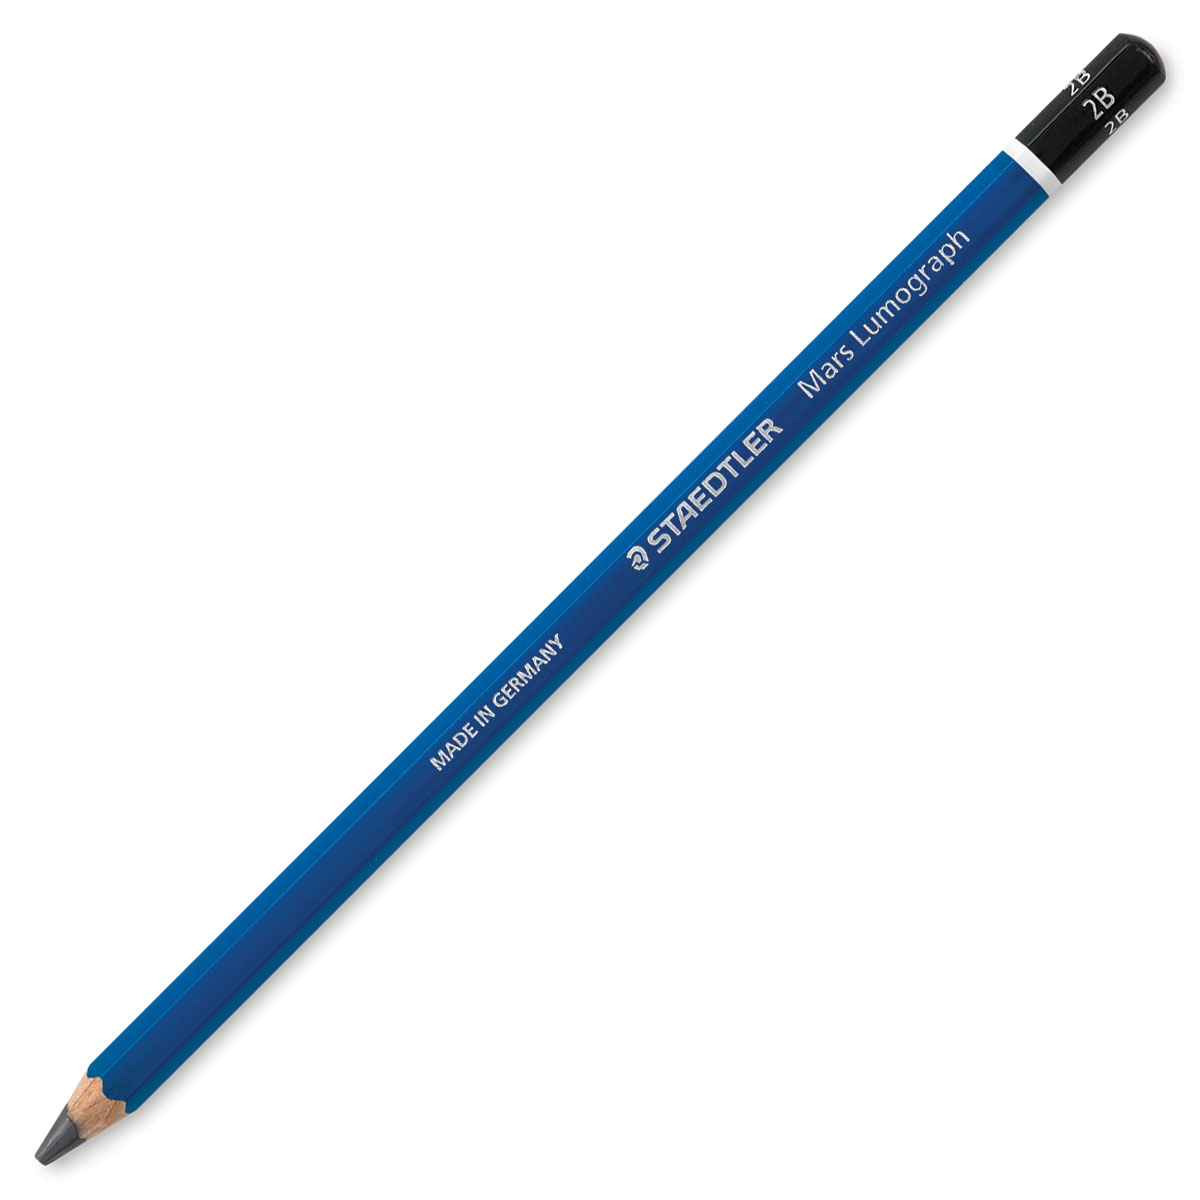  STD100WP4  Staedtler-Mars Lumograph set Drawing Pencils